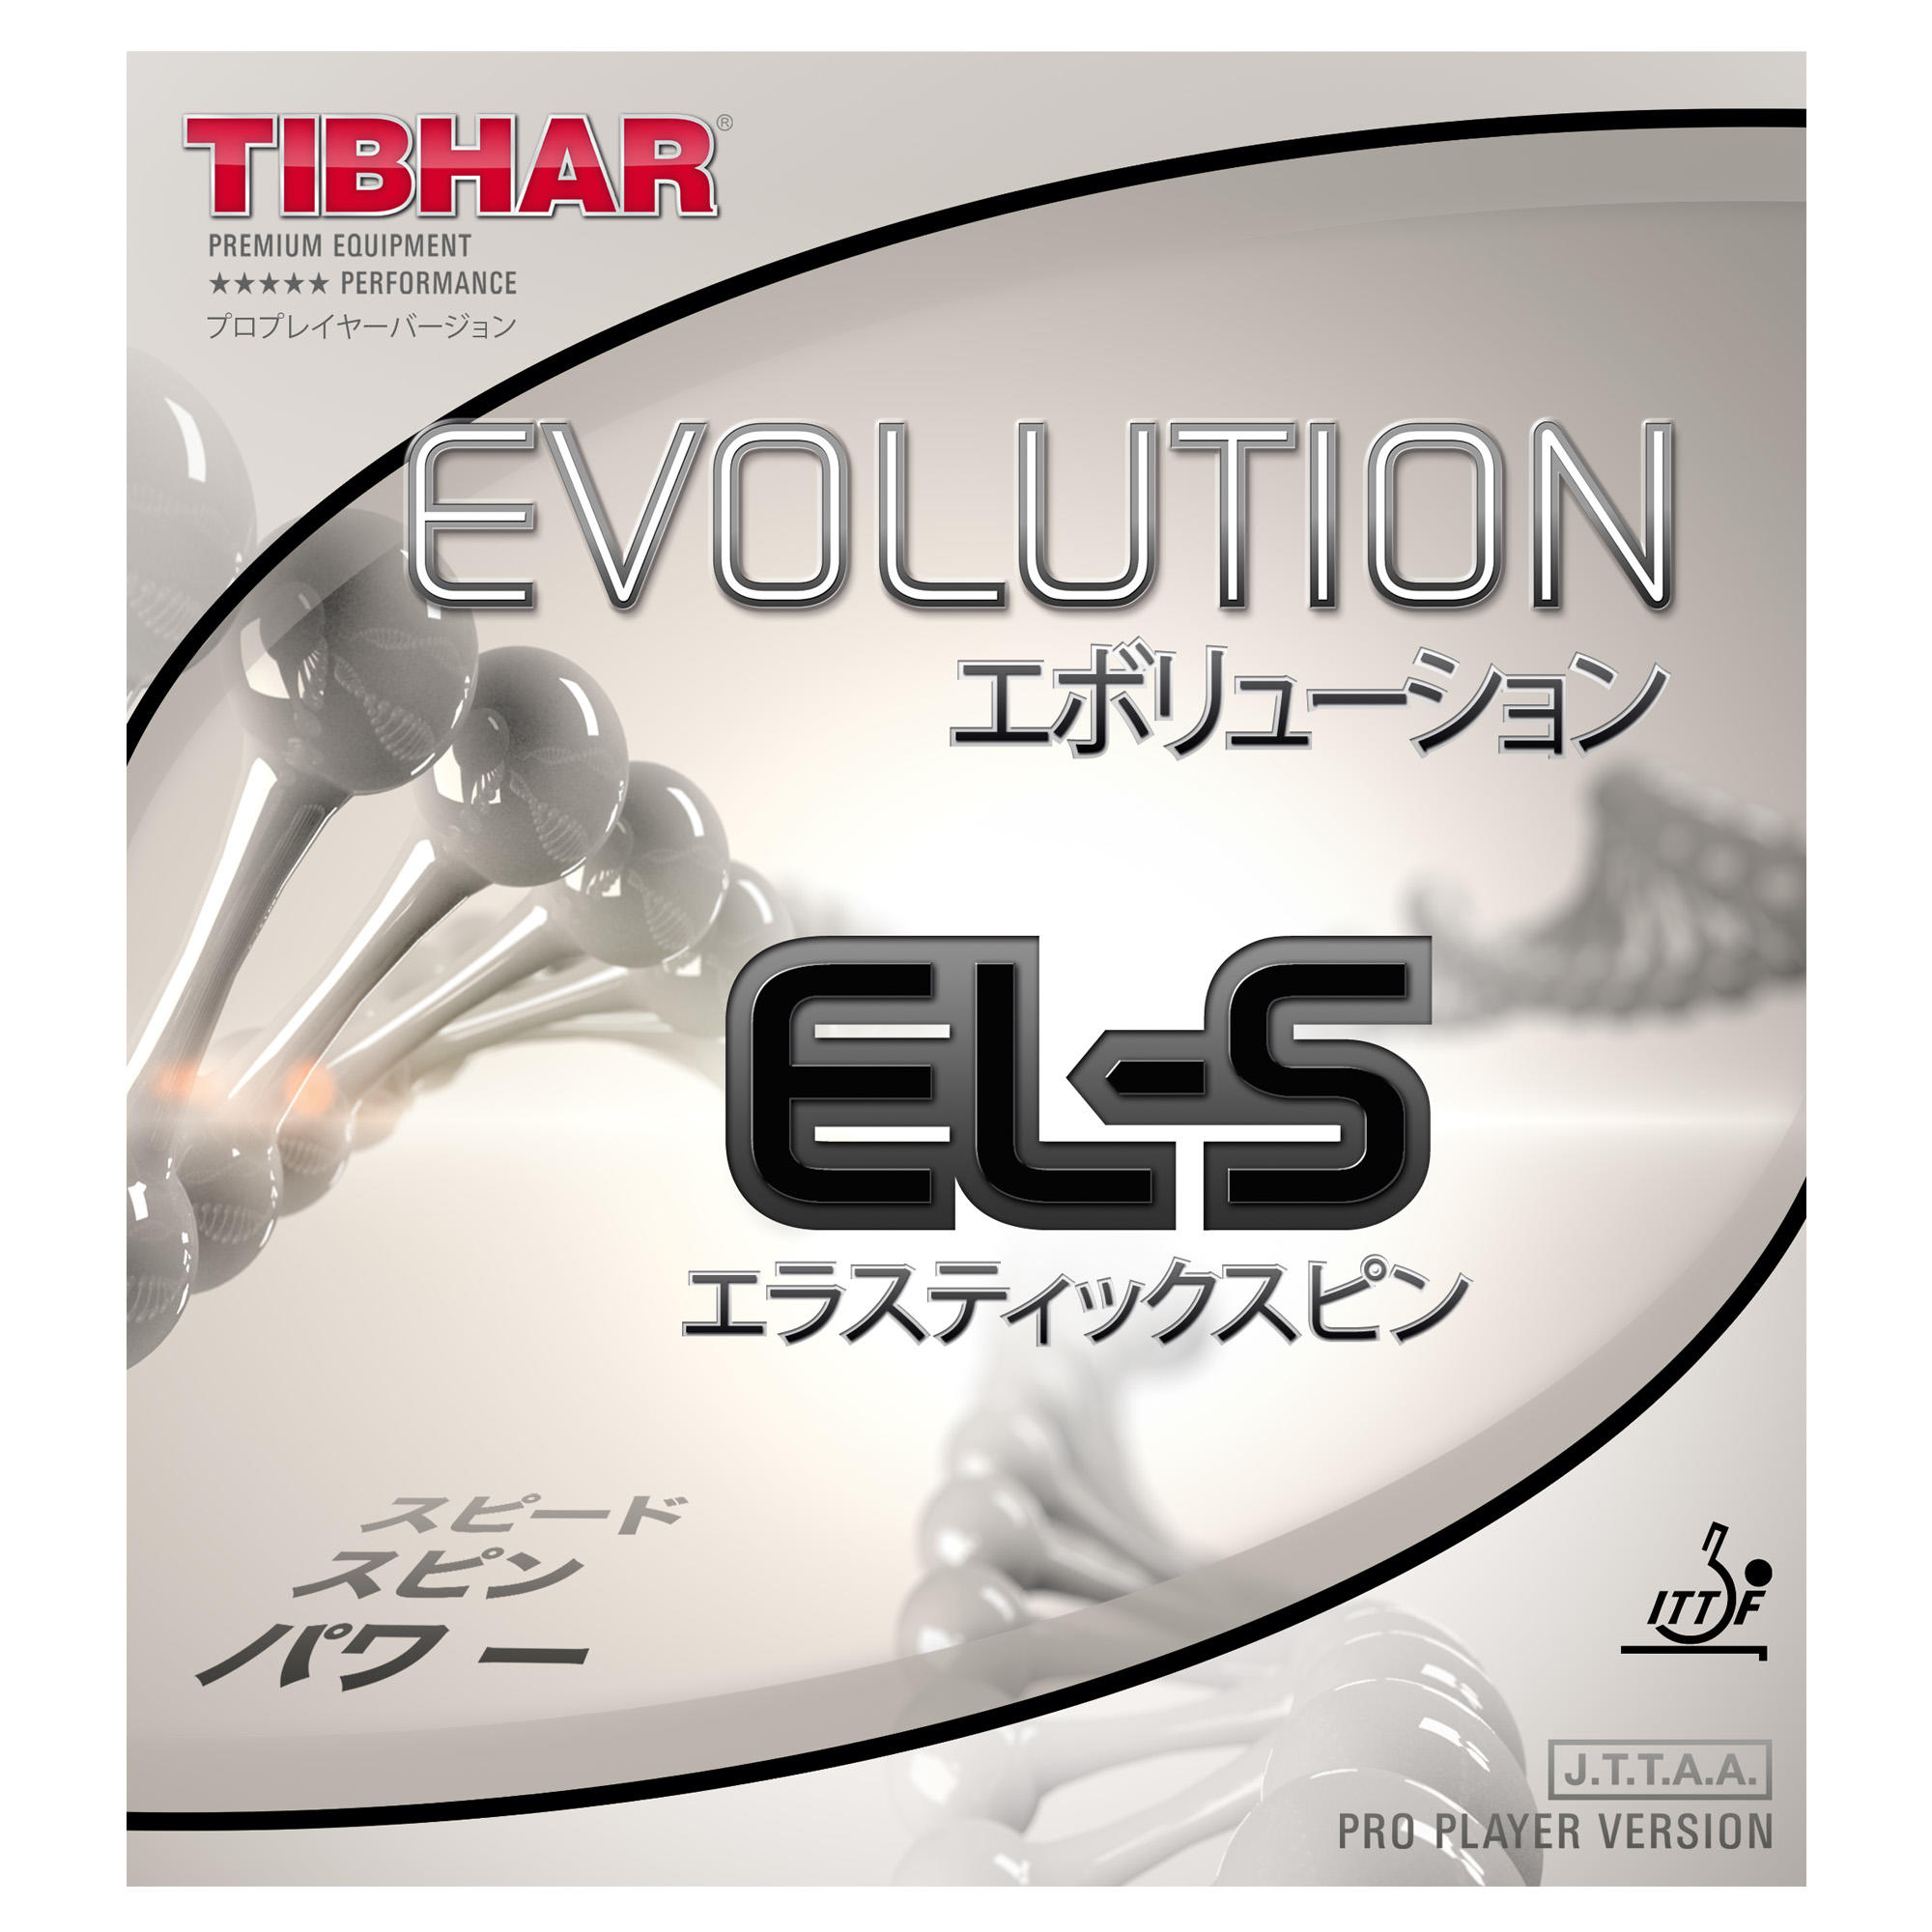 Față Paletă Tenis Evolution EL-S